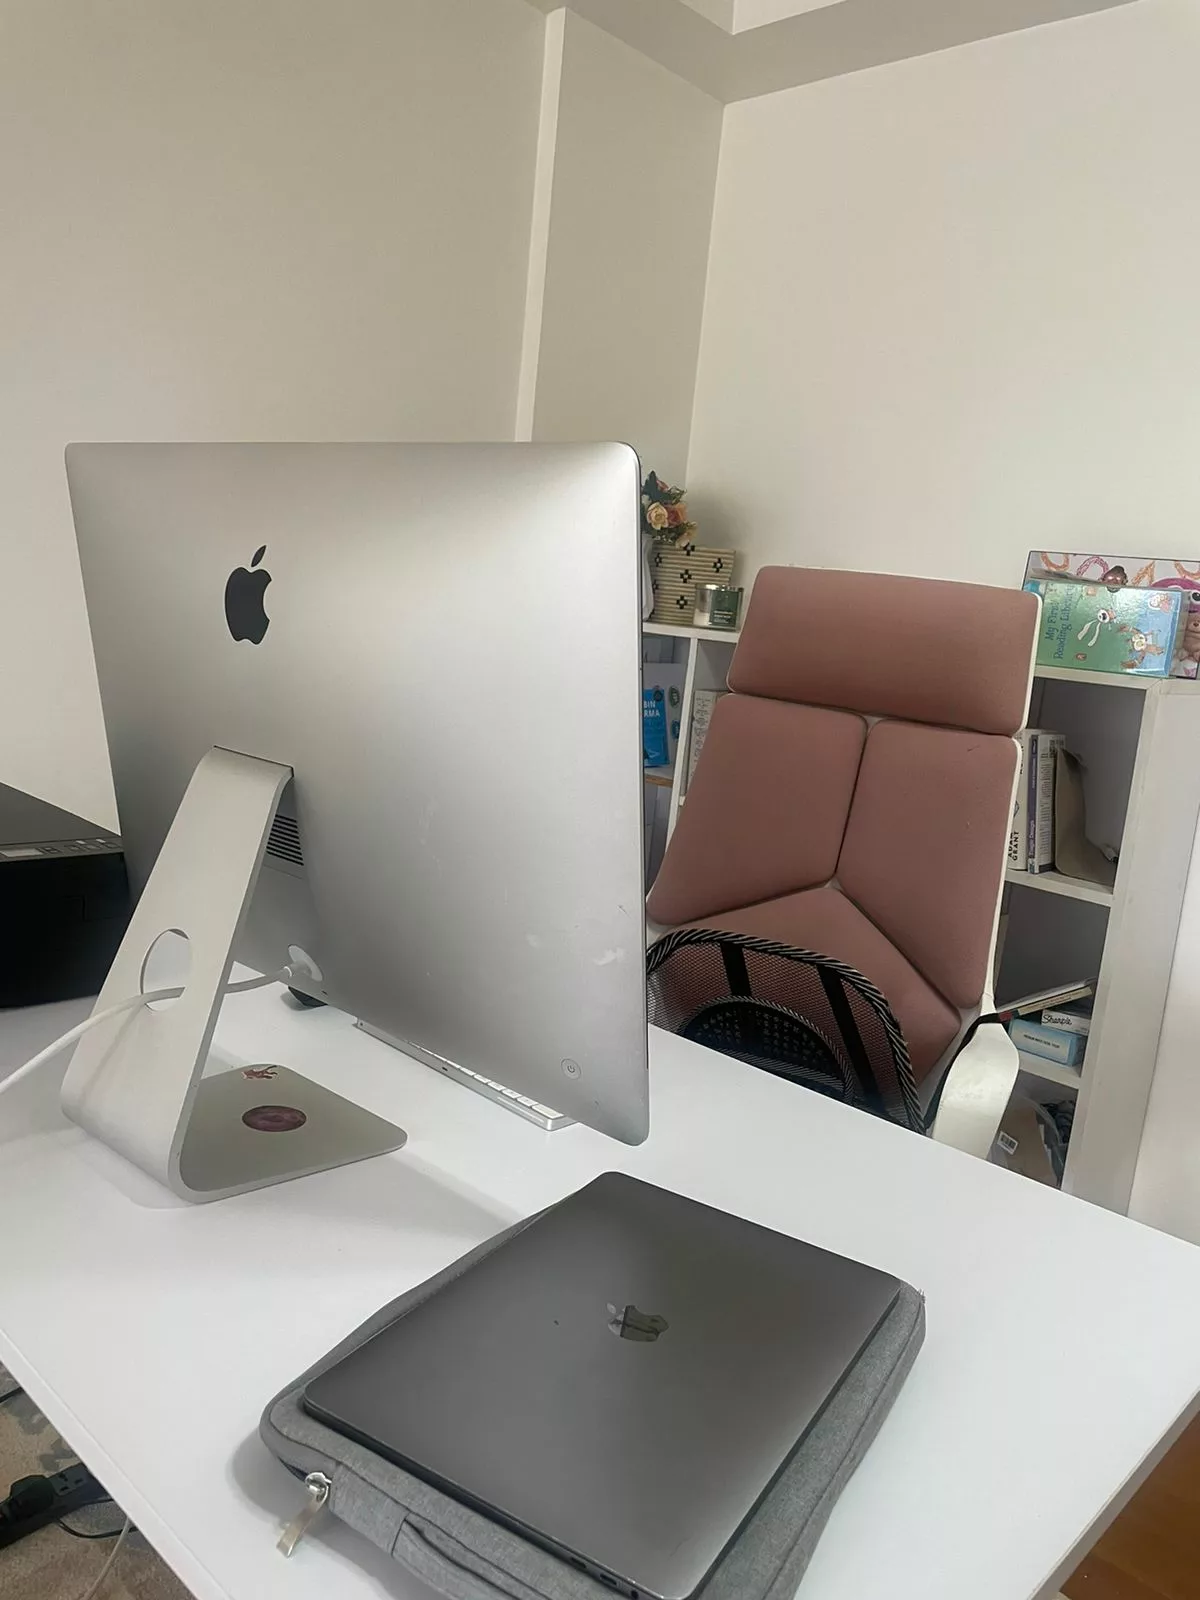 Apple iMac 27 inch for sale